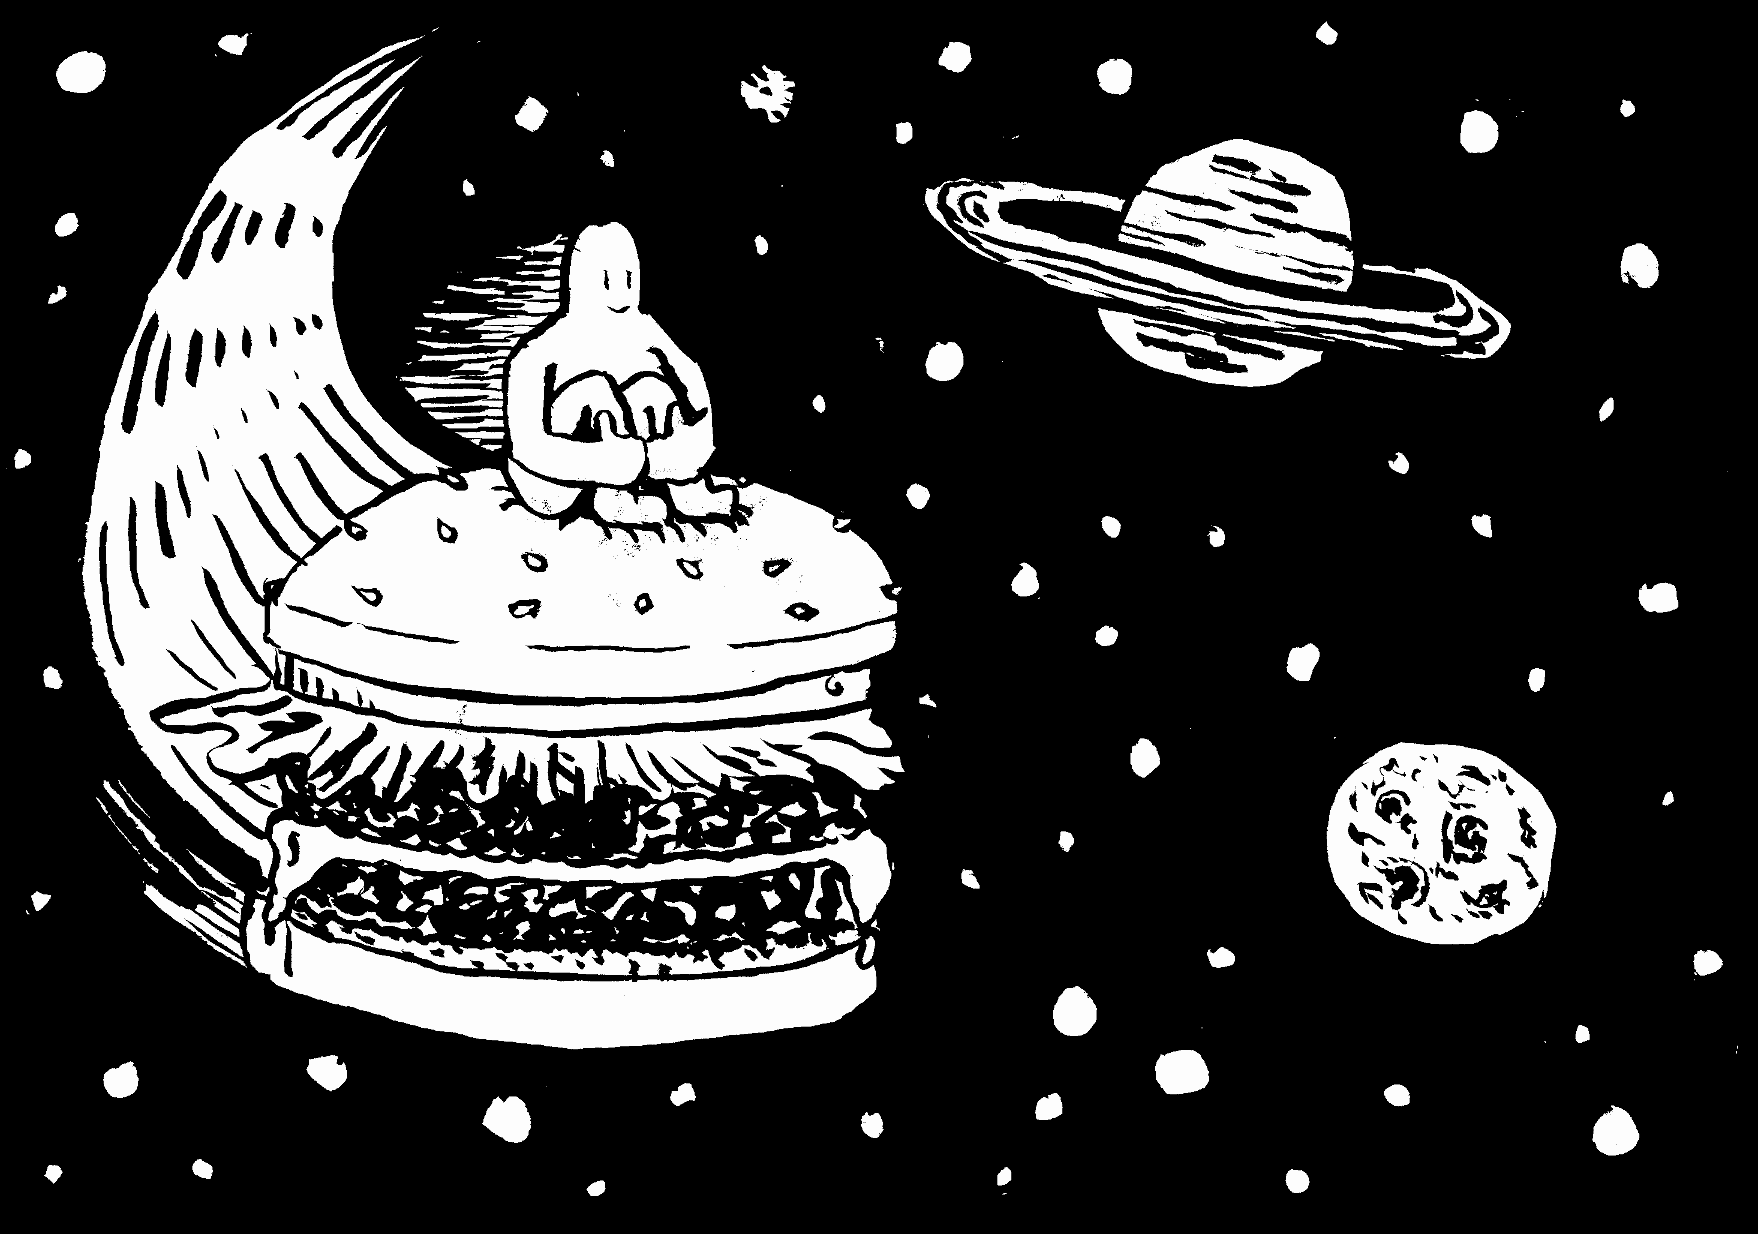 intergalactic hamburger riding spaceship cosmos planets saturn stars